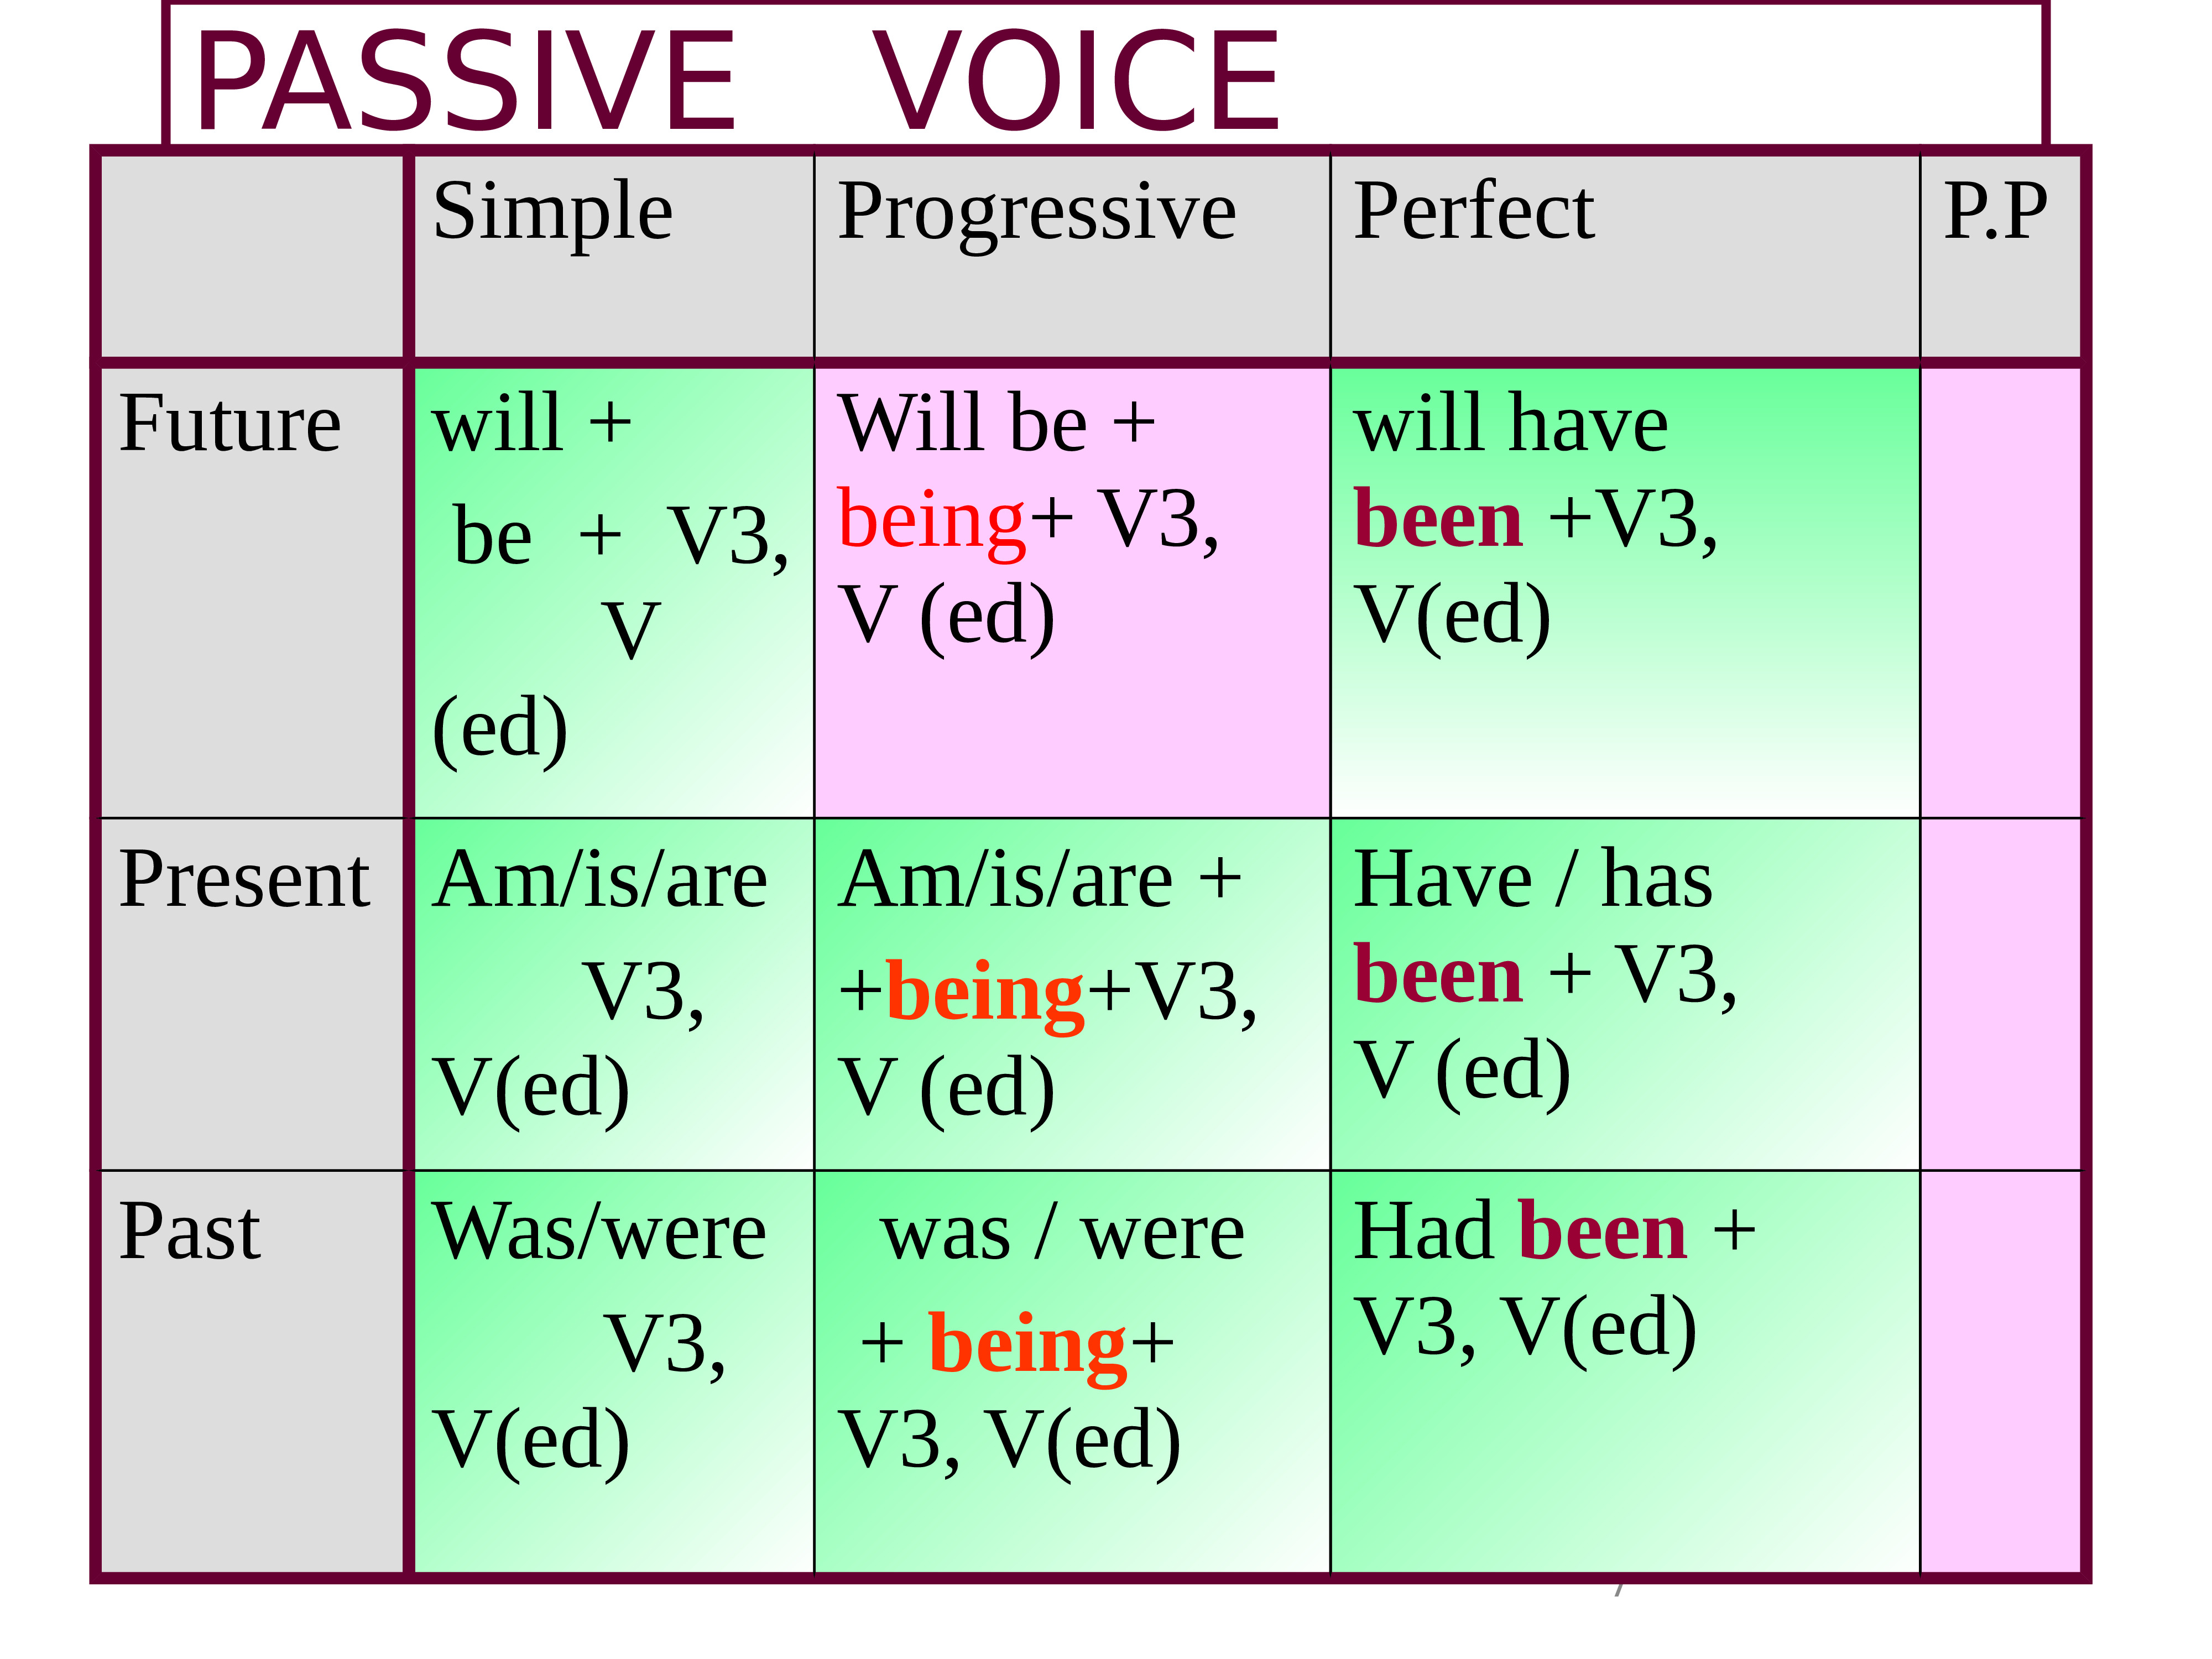 Passive voice in english. Passive страдательный залог. Пассивный залог (Passive Voice). Формула present Passive Voice. Формула пассивного залога в английском.